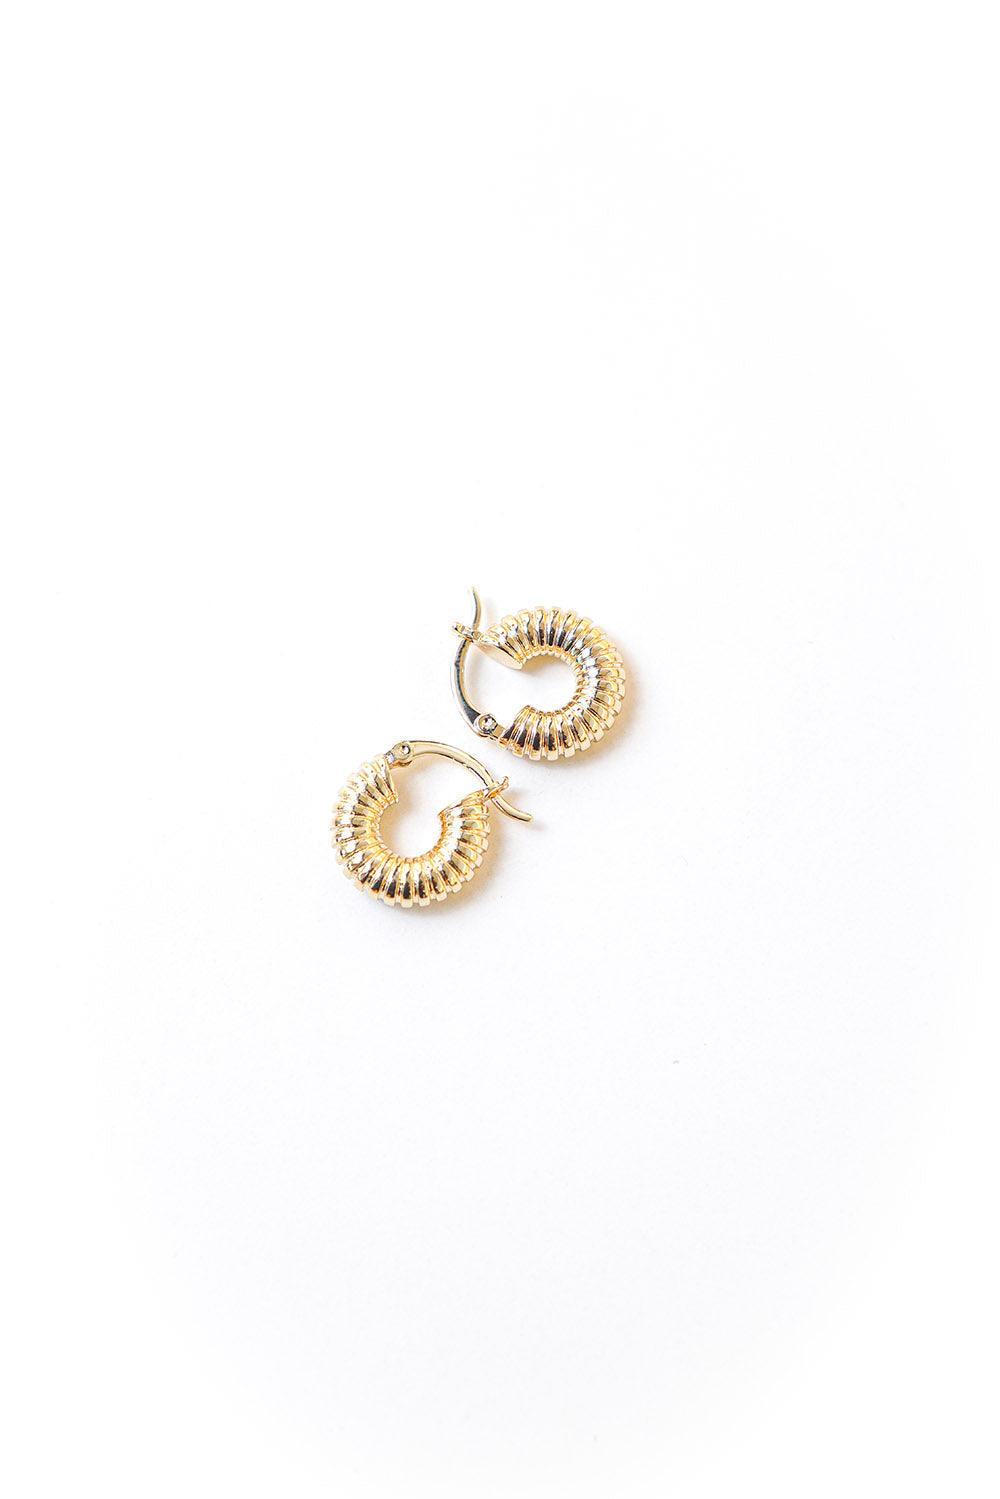 Gold tone twisted huggie earrings with secure hinge enclosure. 20mm diameter